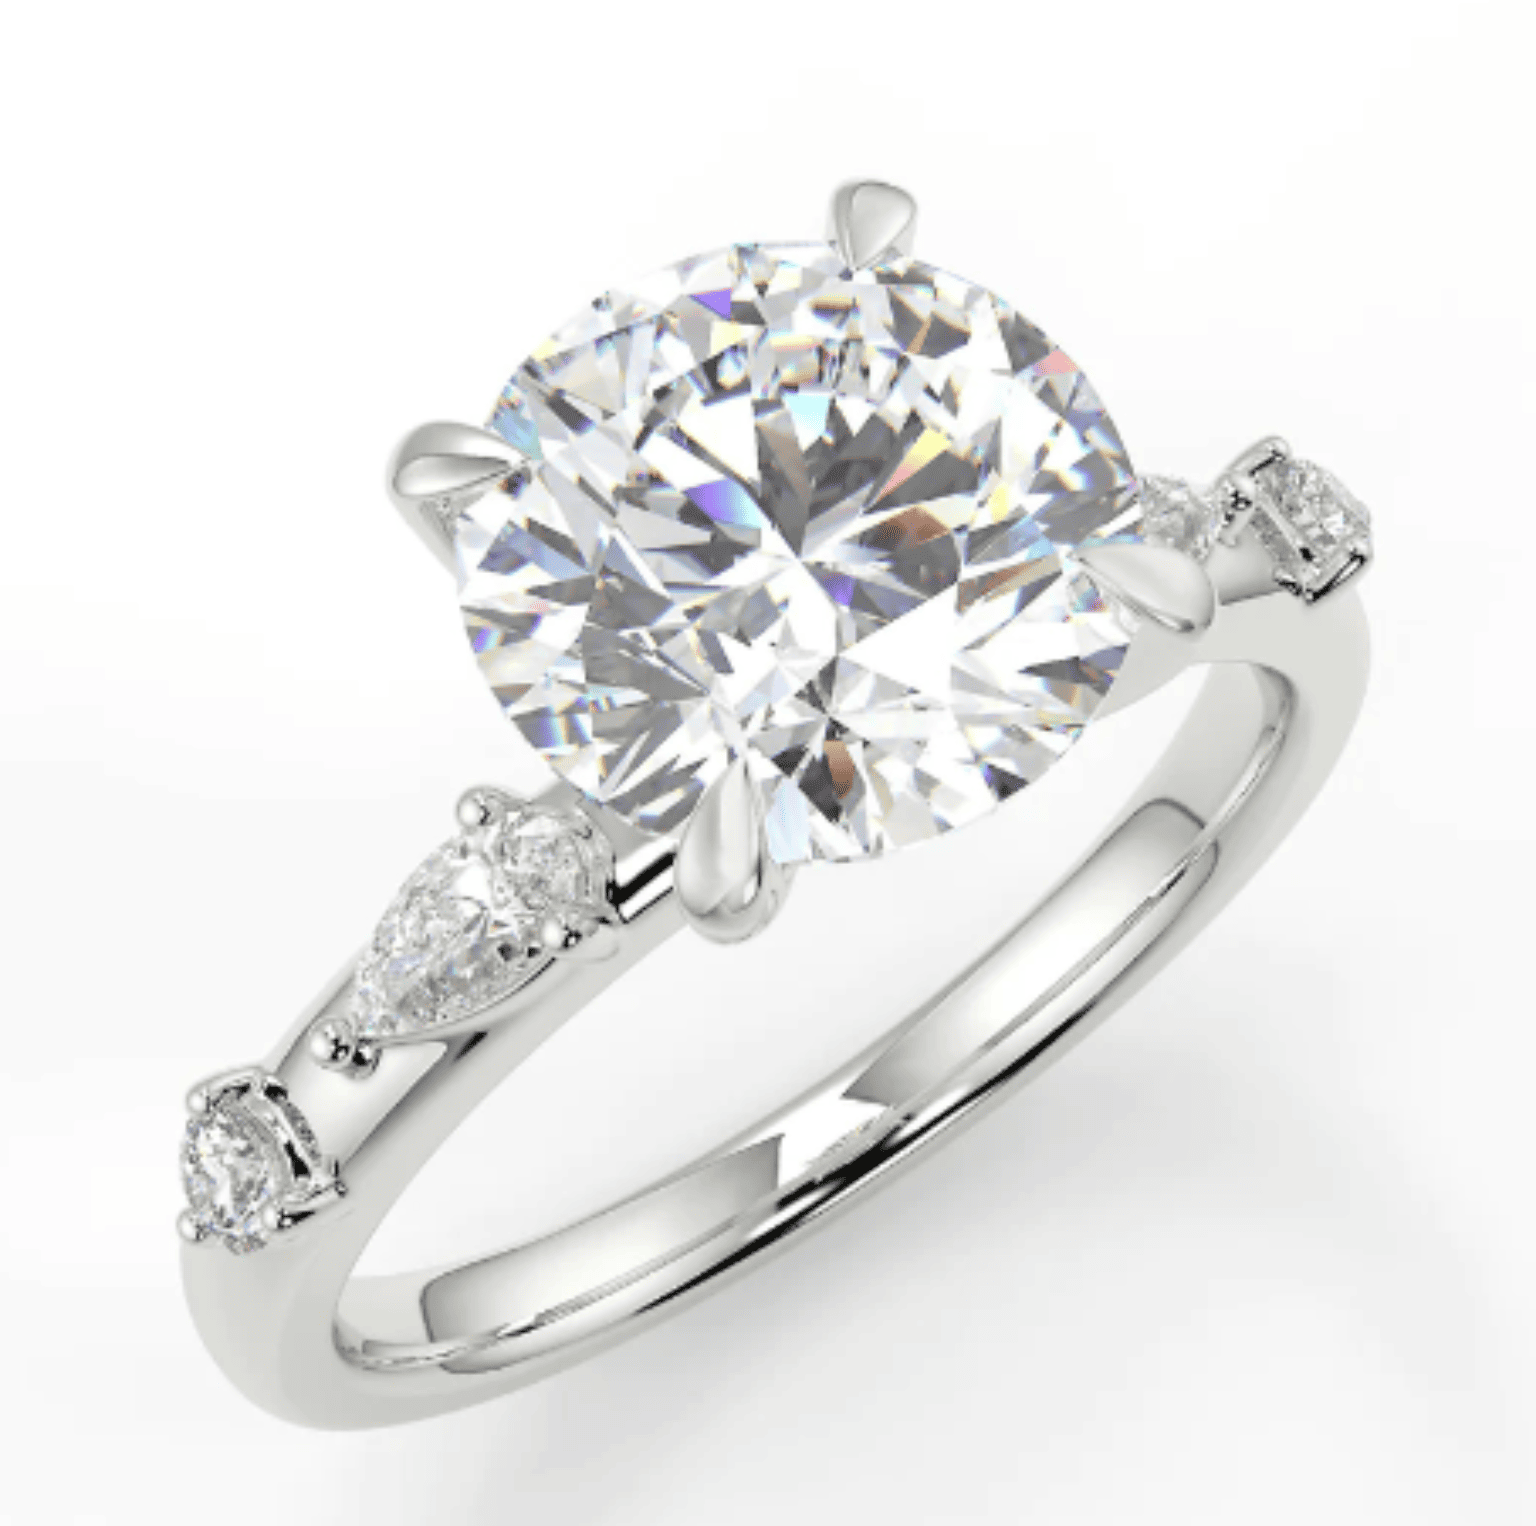 Round Cut Diamond Engagement Ring Liviadiamonds 1536x1526 